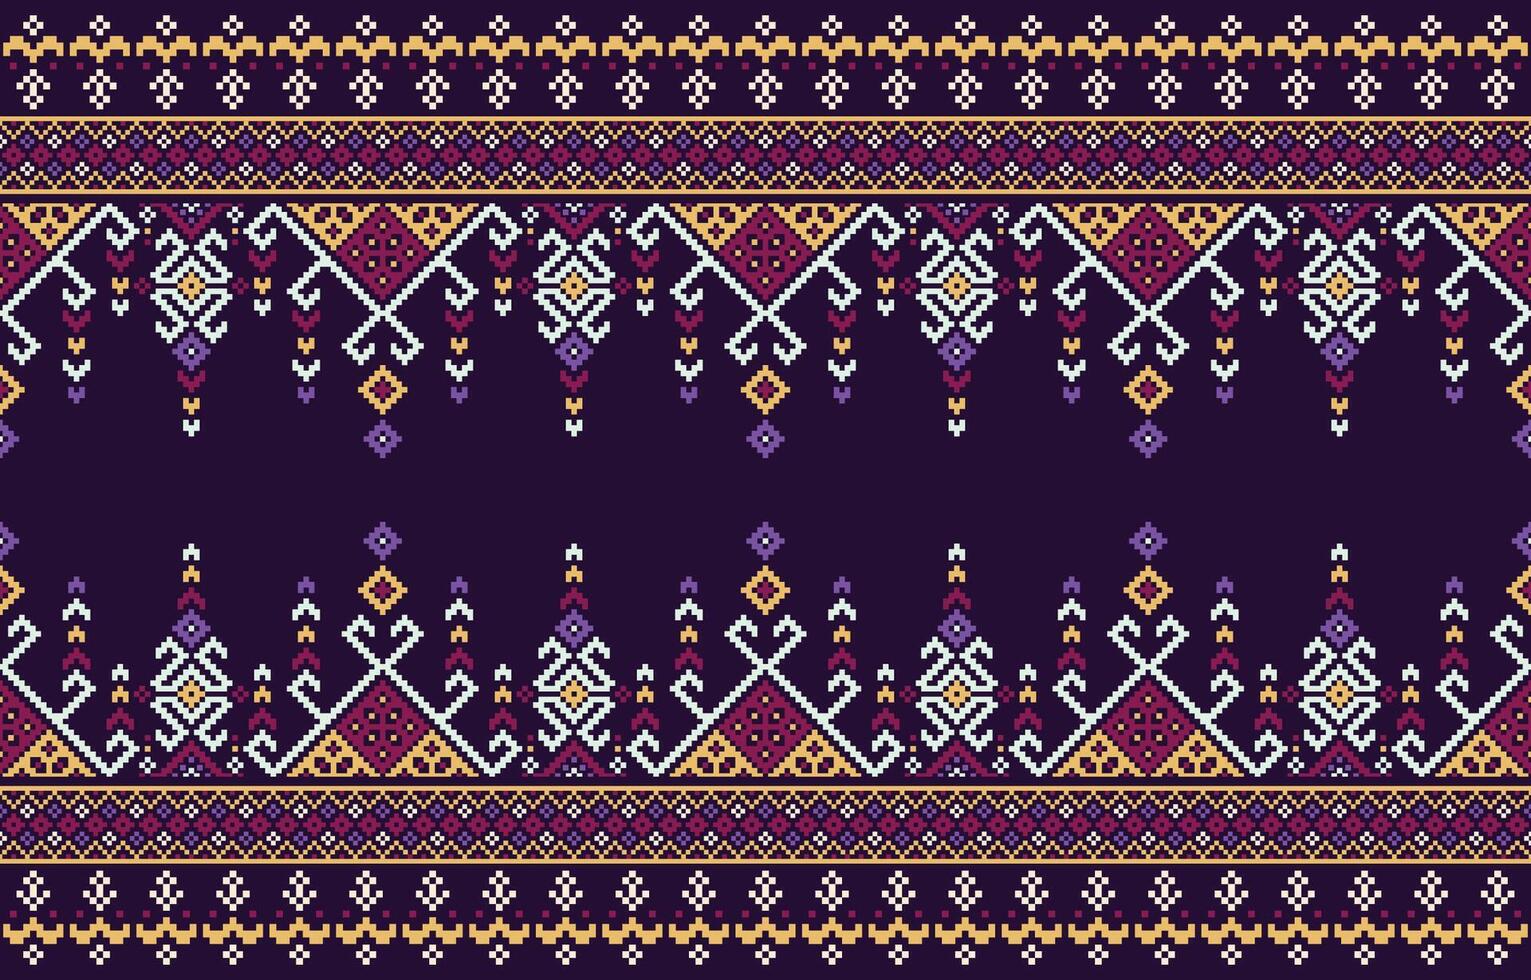 Embroidery pattern. Cross stitch pattern. Ethnic patterns on a dark bule background. Design for fabric,pattern,pixel,geometry,motif,towel,horizontal,border,folk,retro,handcraft,abstract,batik,zigzag. vector